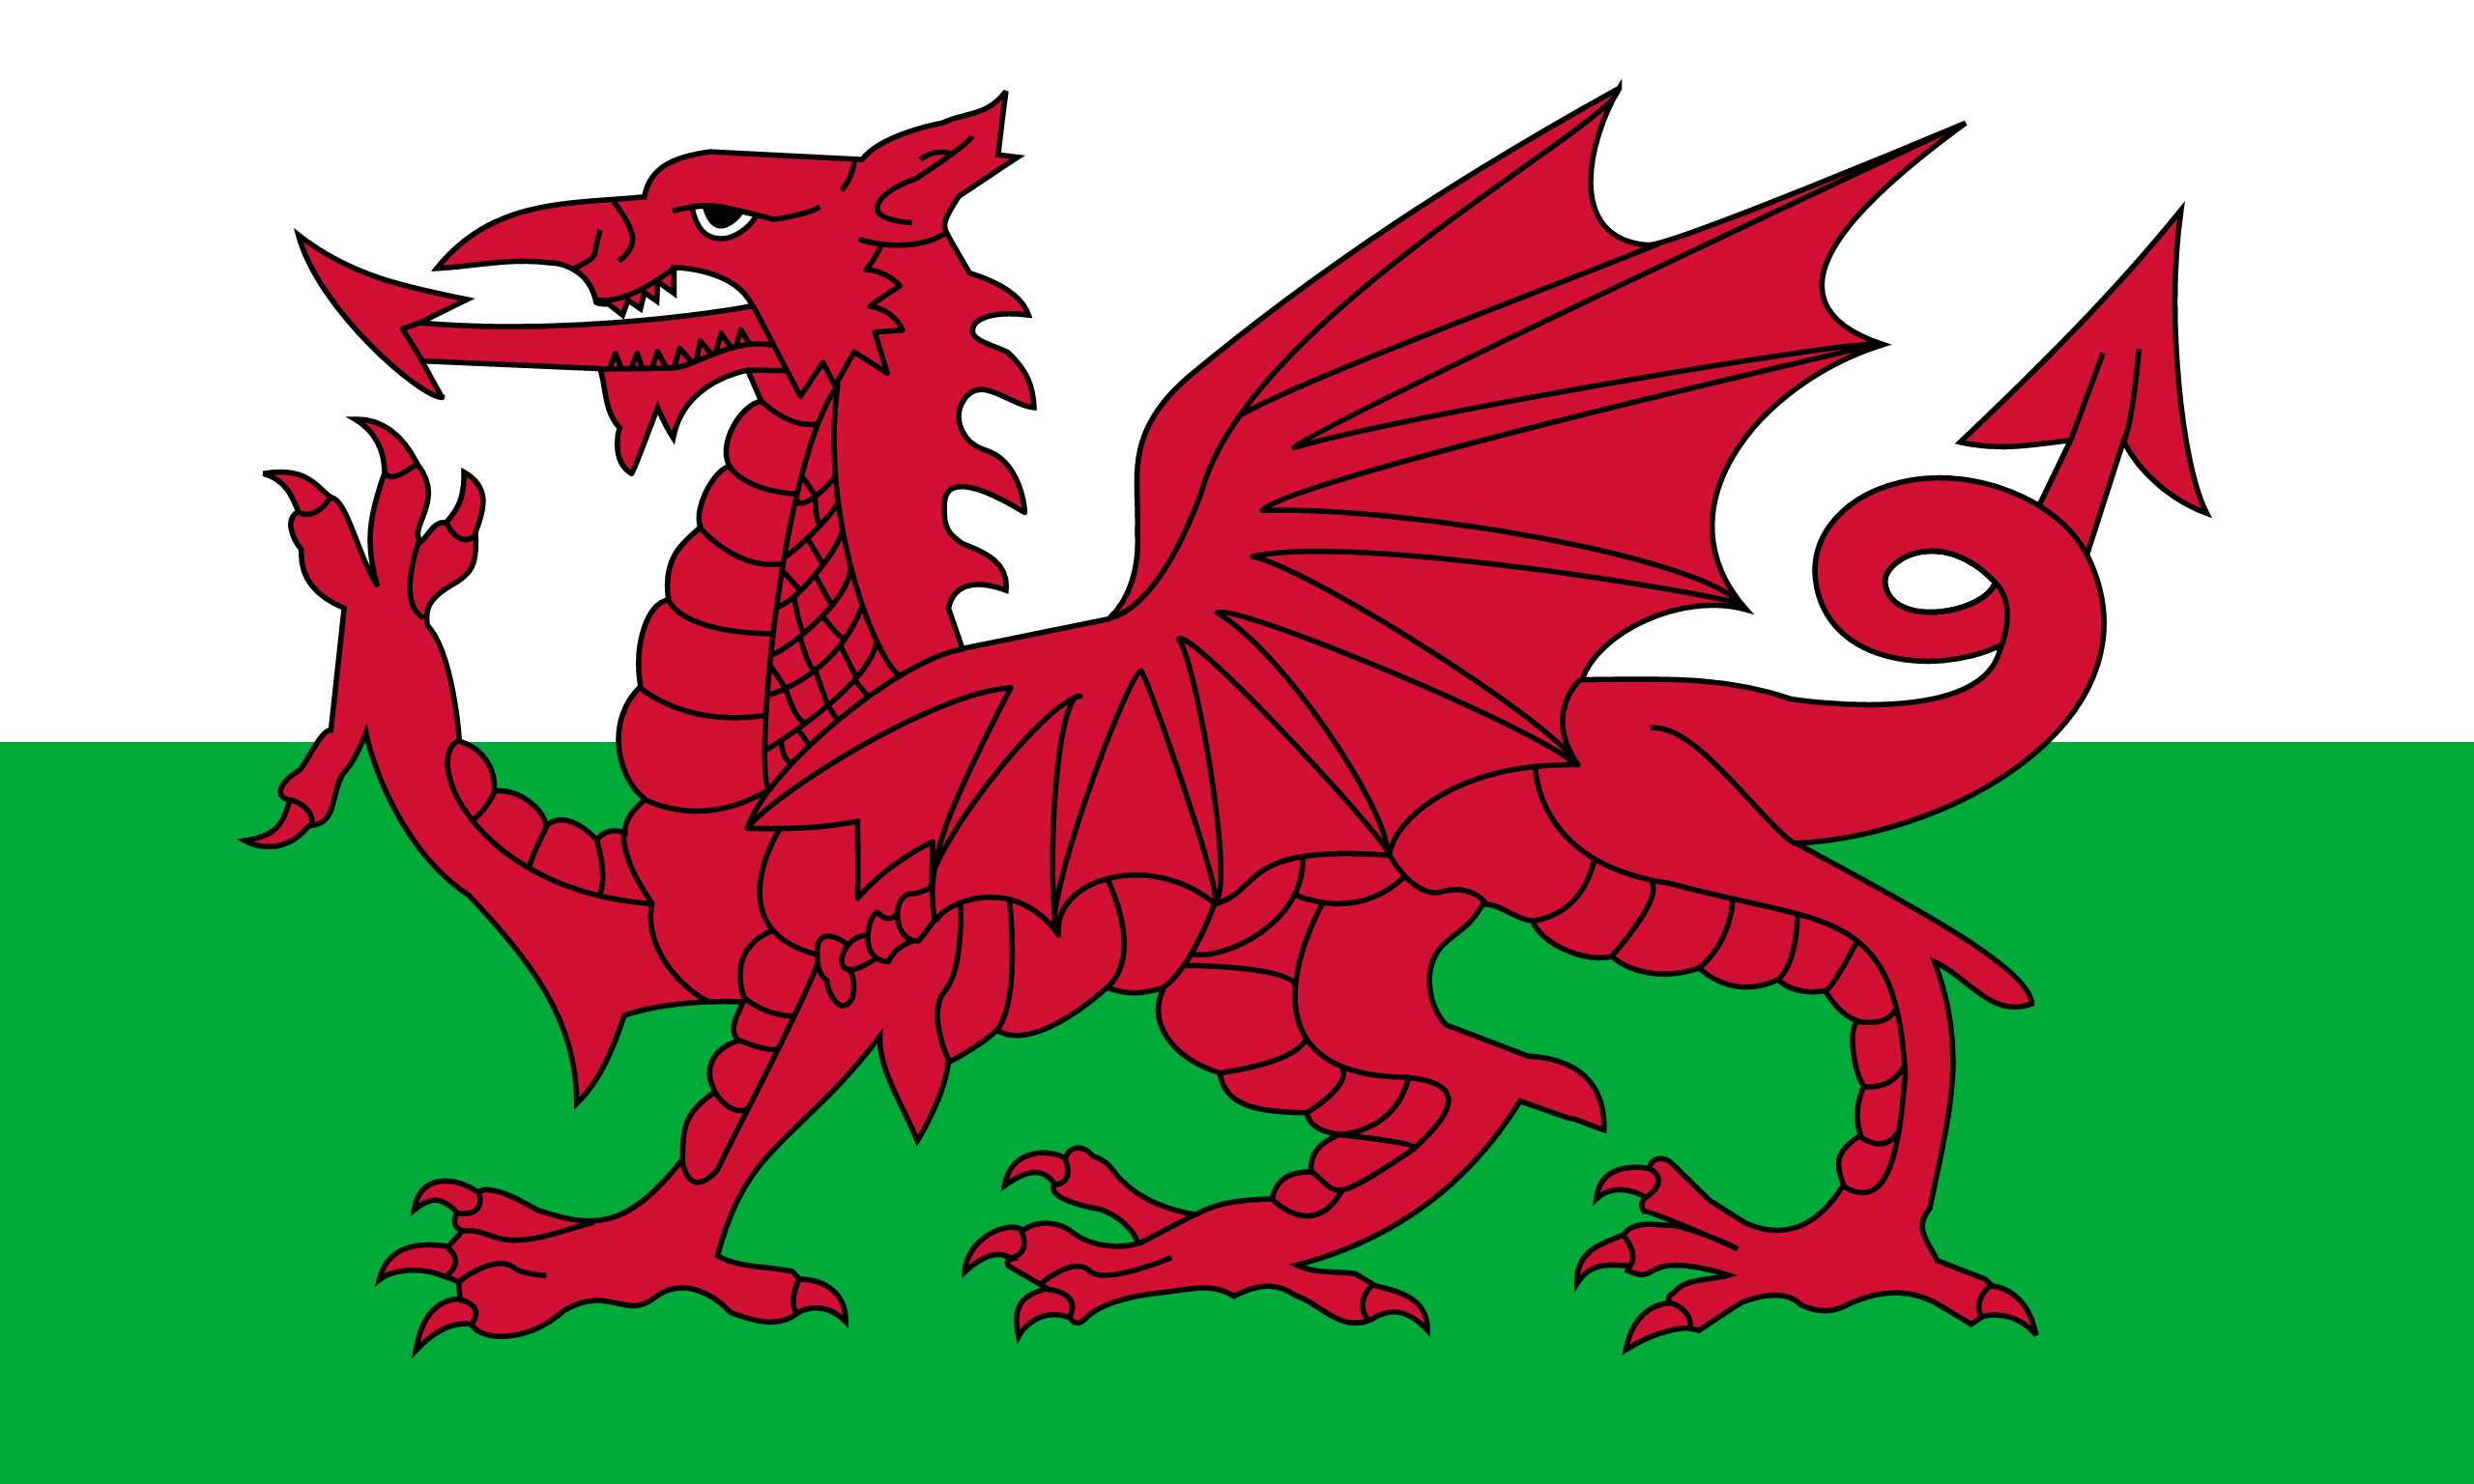 Wales - Autumn Internationals